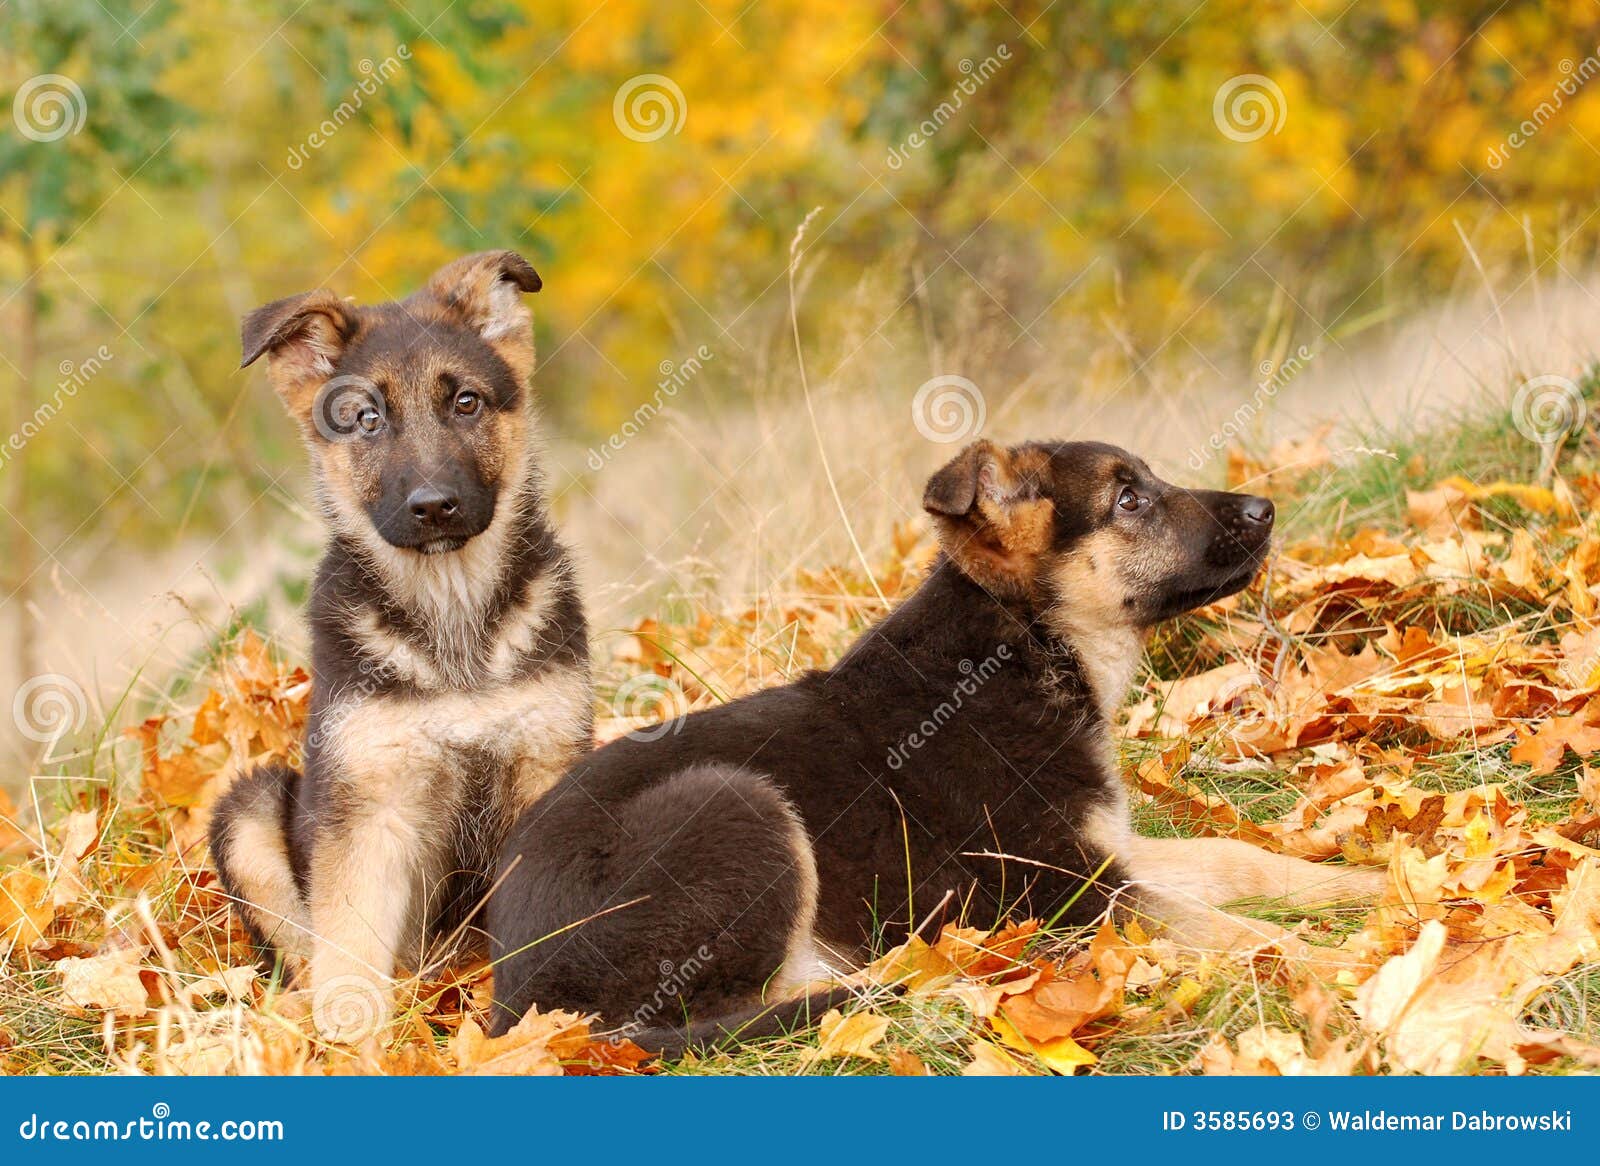 german shepherd dog puppy